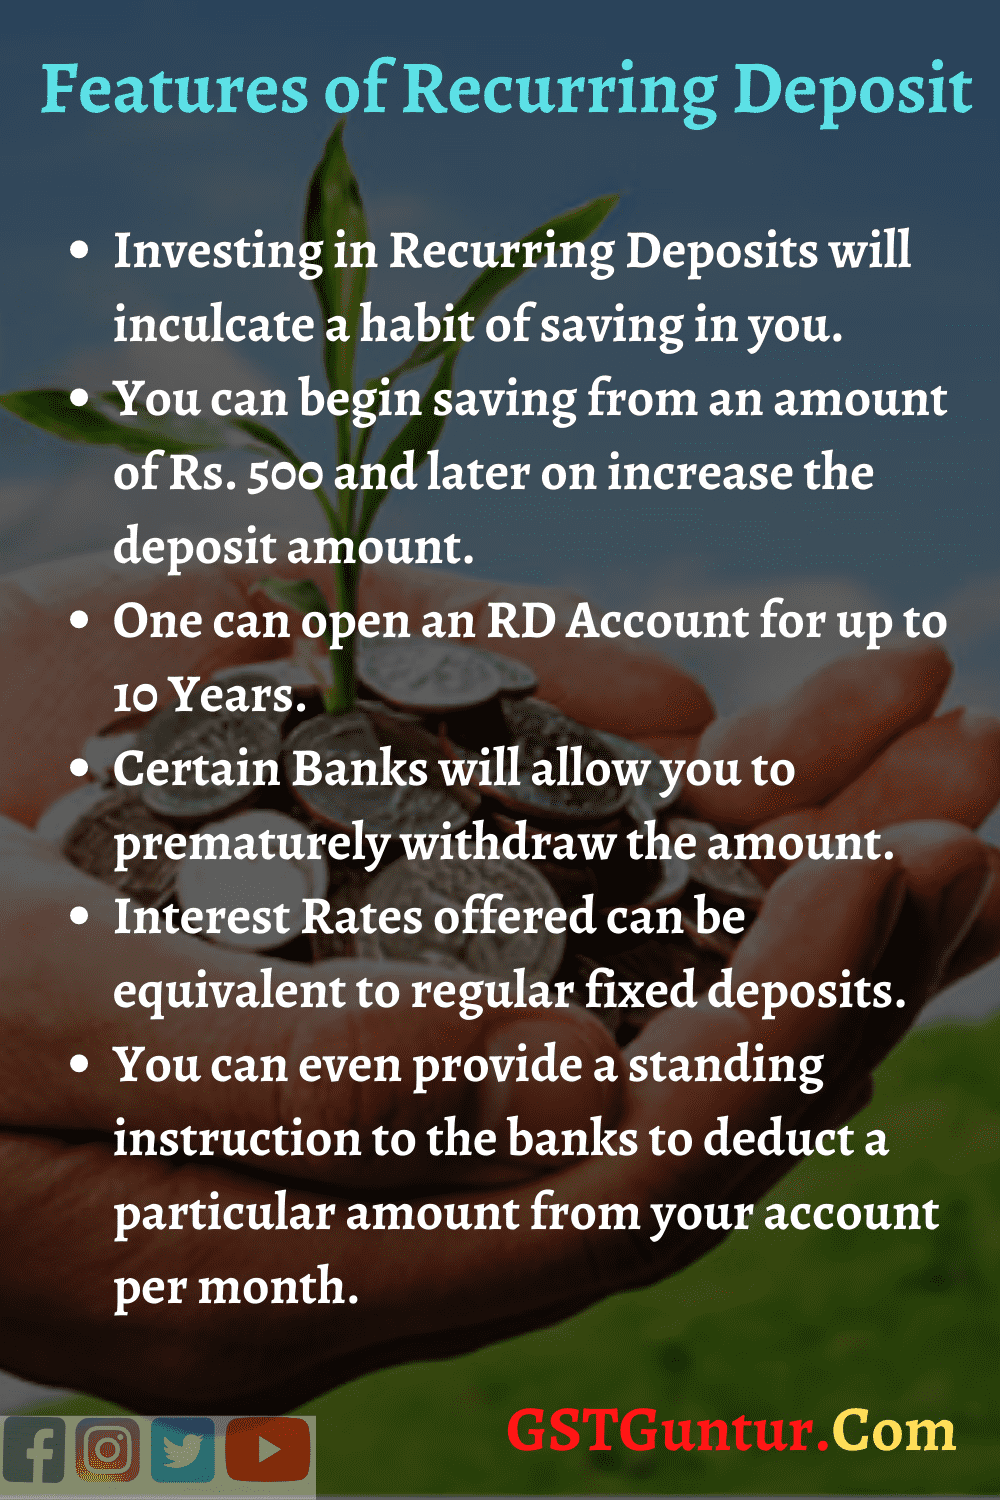 Features of Recurring Deposit